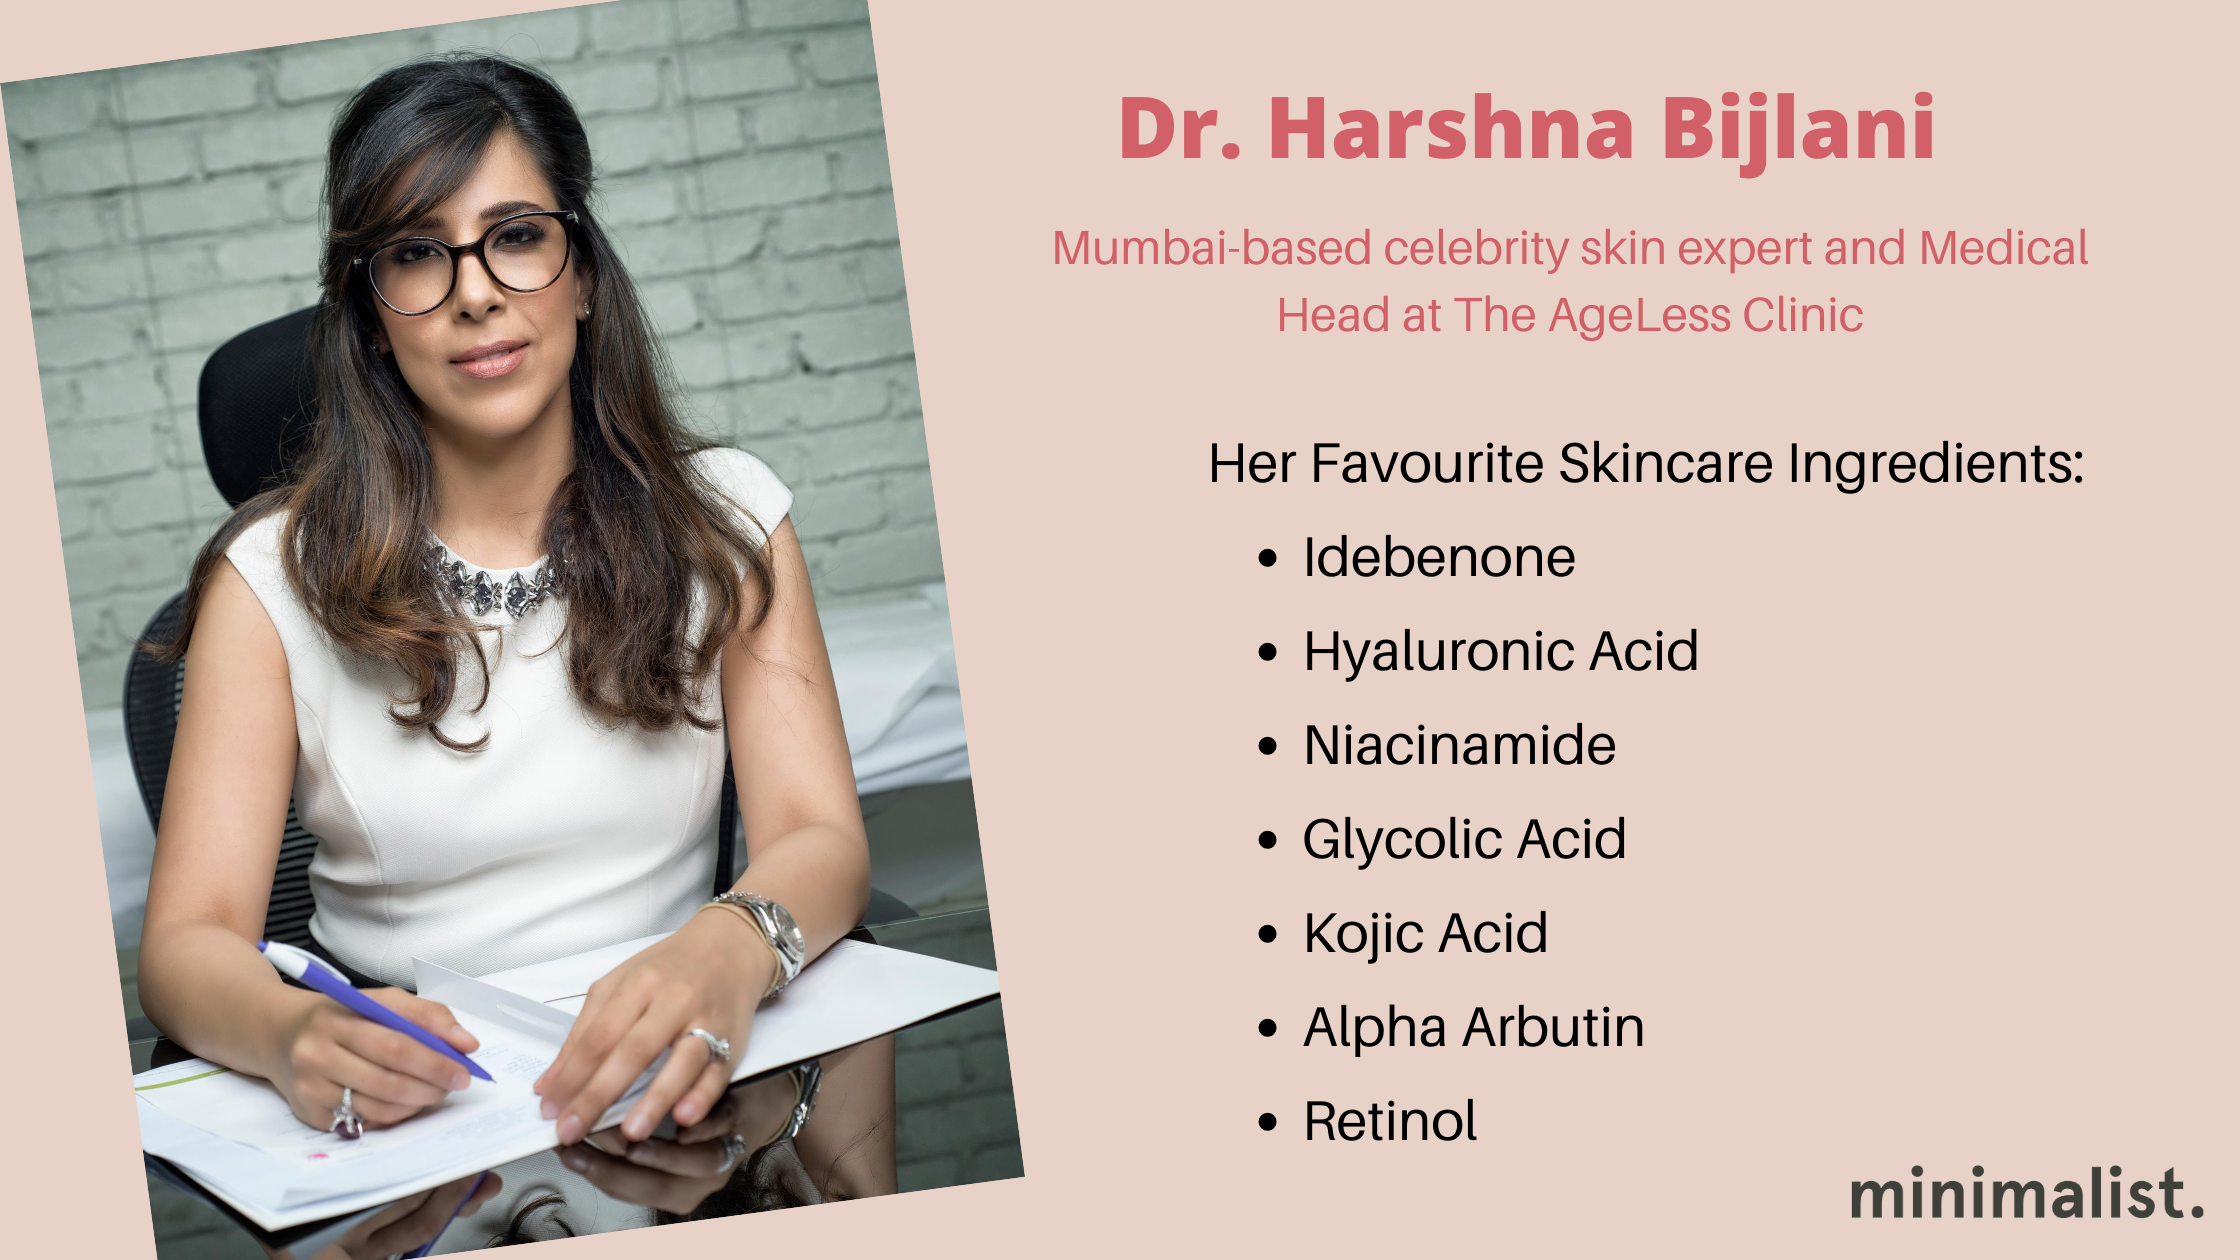 Dr. Harshna Bijlani